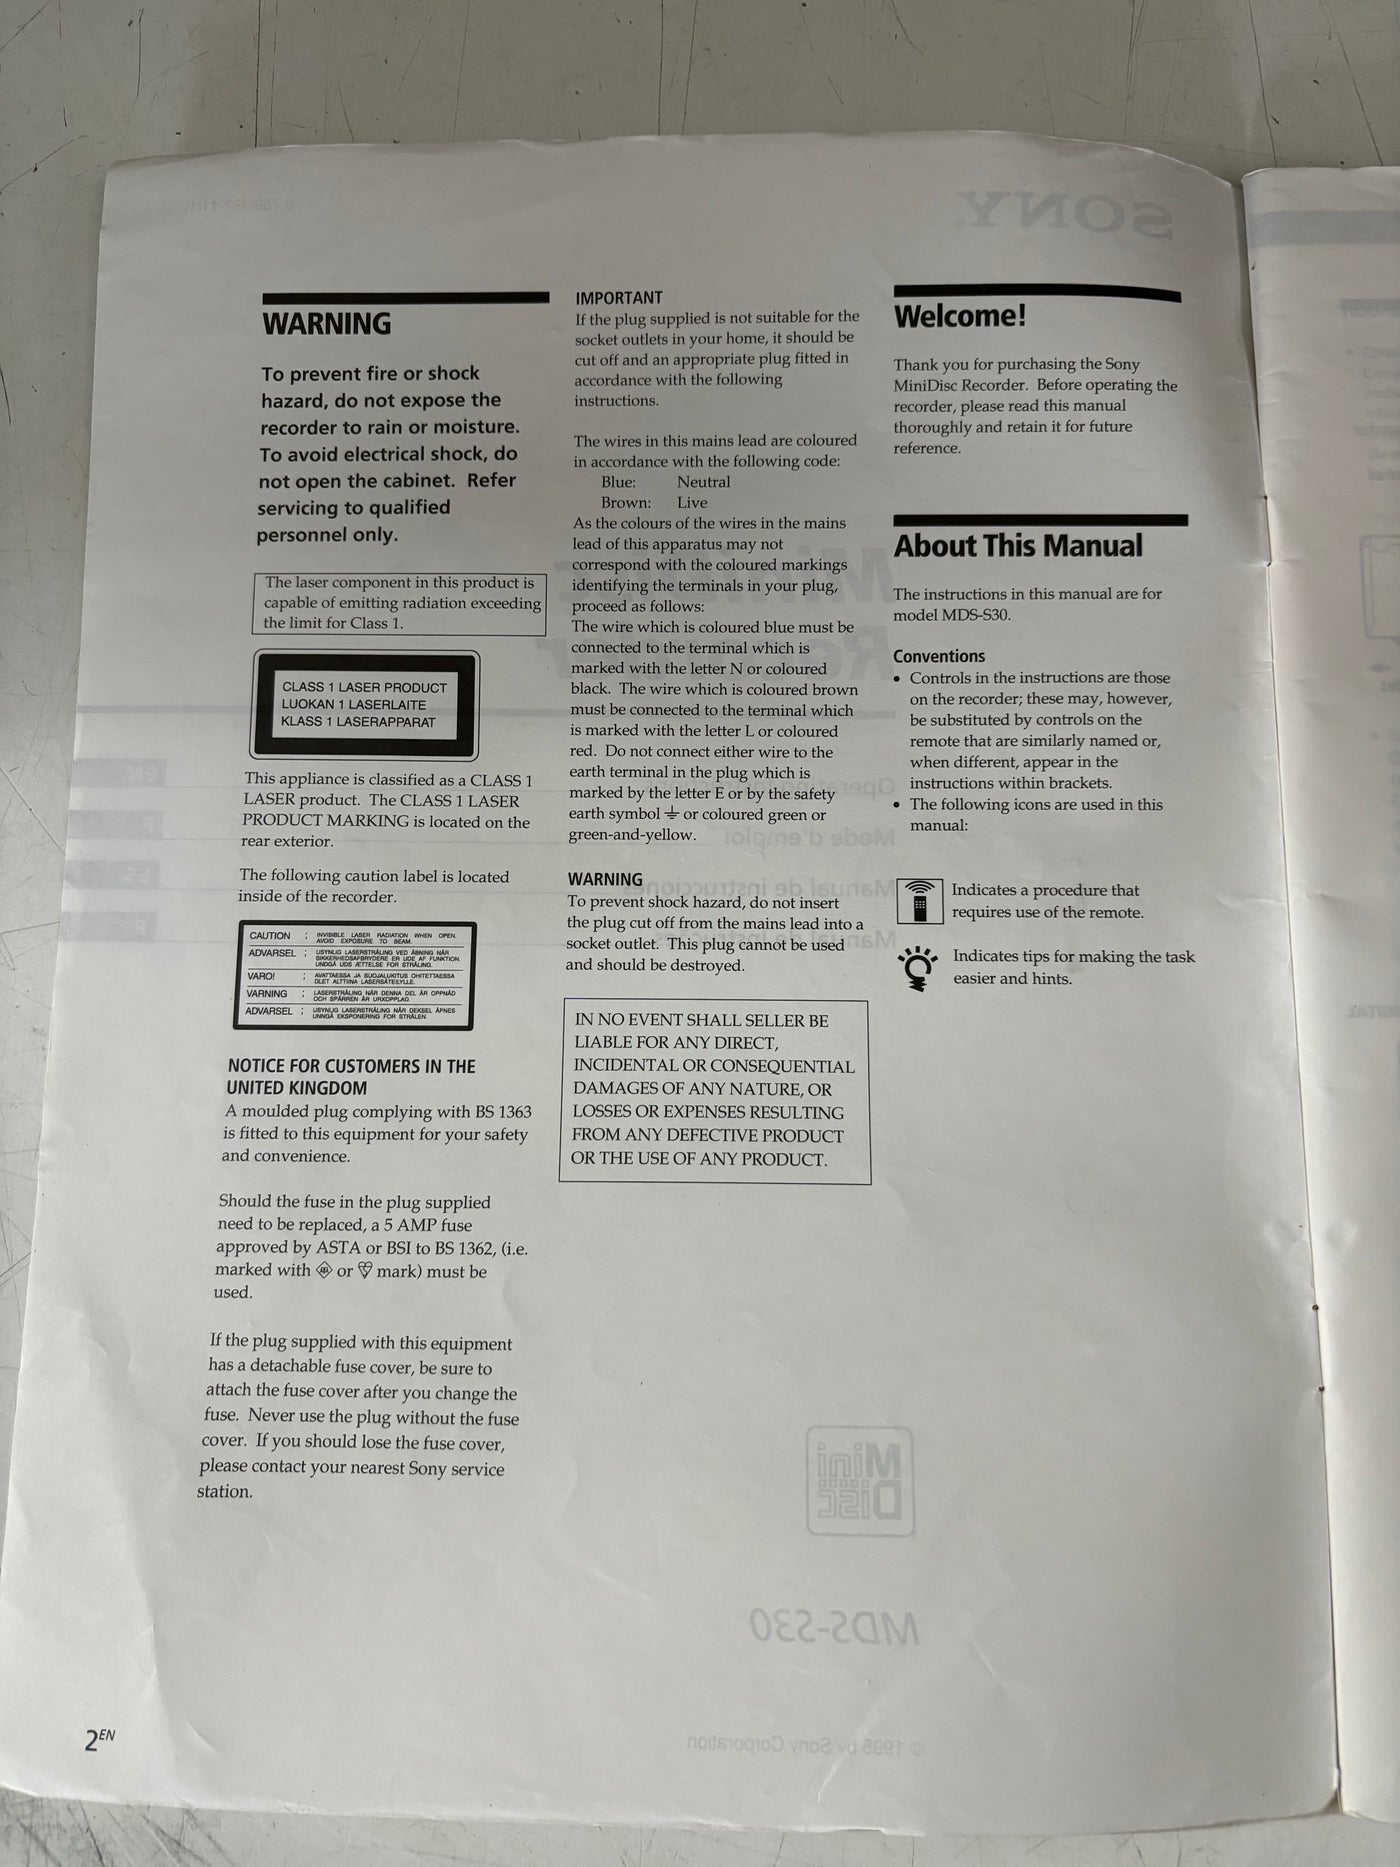 Sony Minidisc Recorder MDS-S30 User Manual